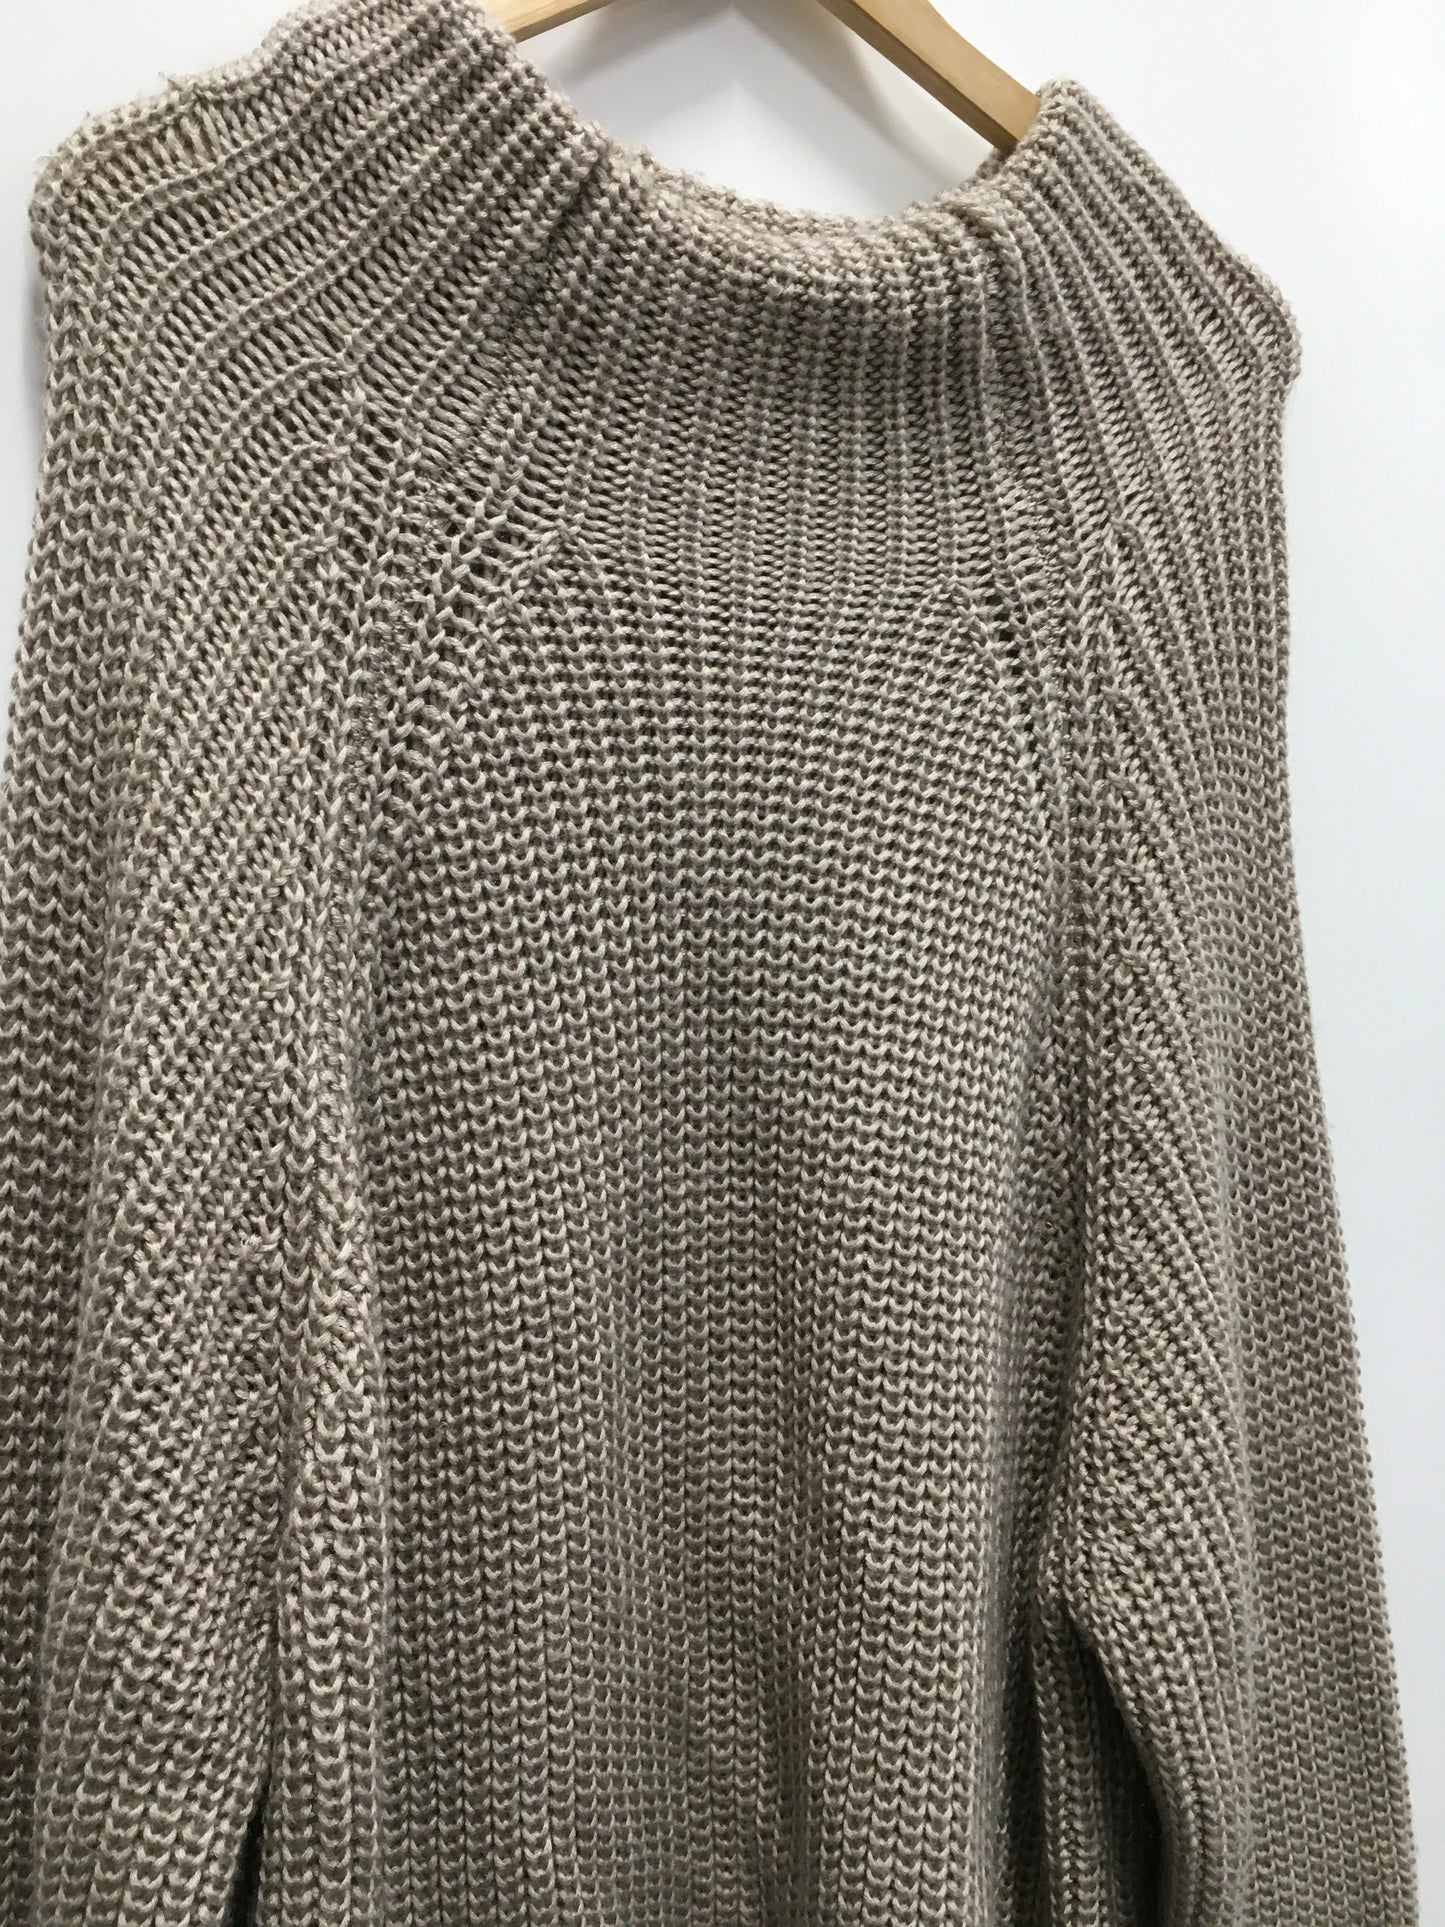 Sweater By Harper lane Size: Xxl